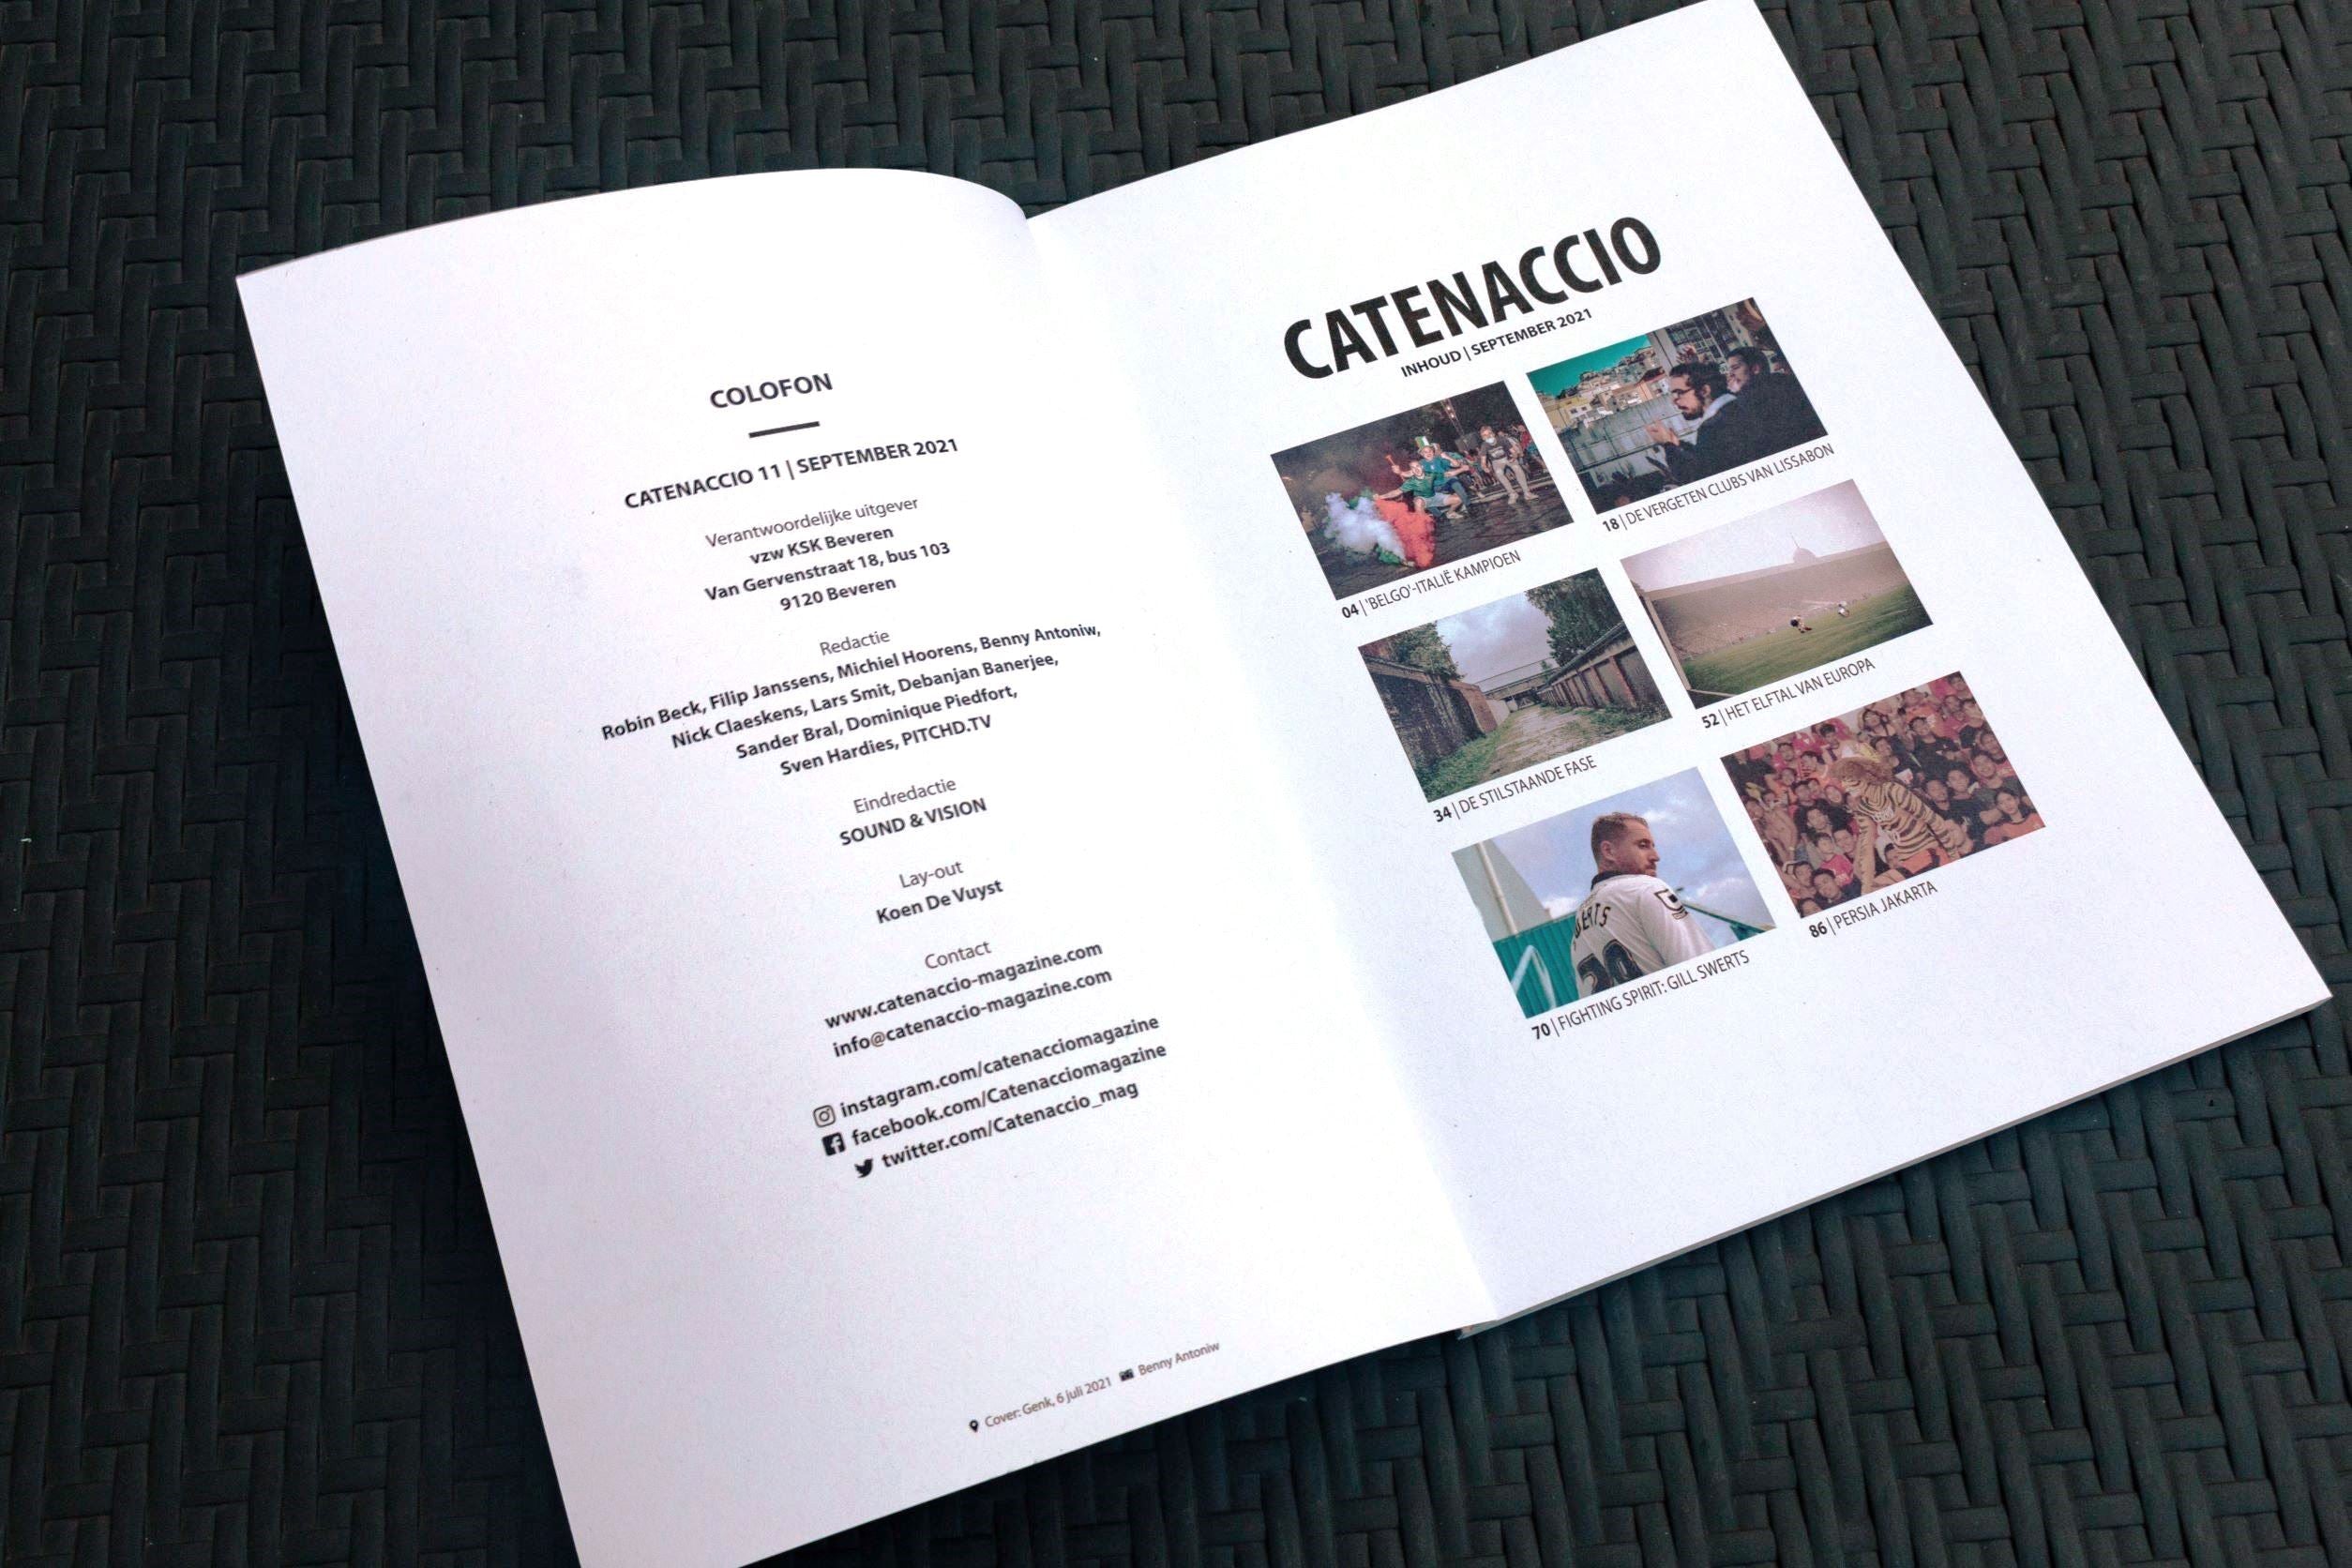 Catenaccio Magazine #11